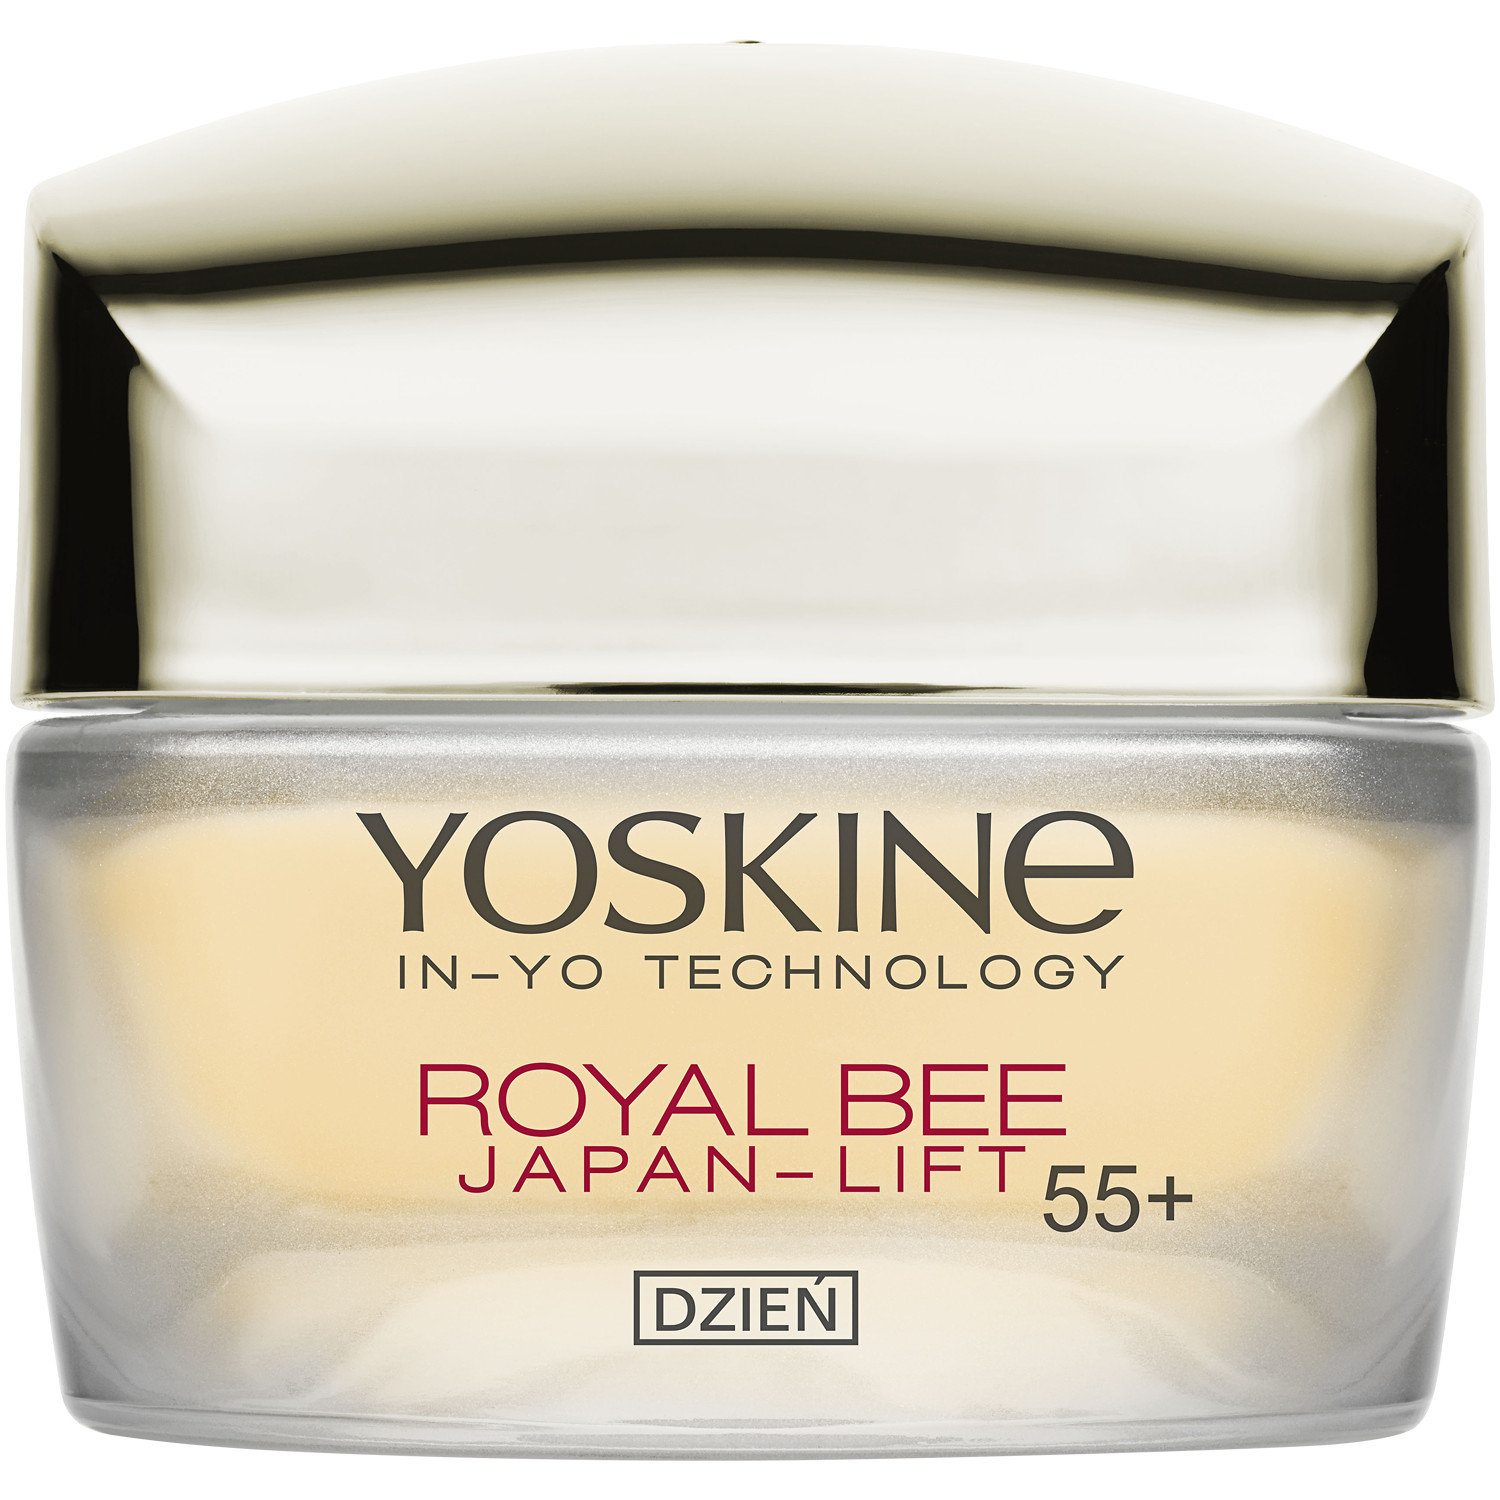 Yoskine Royal Bee Japan Lift дневной крем для лица 55+, 50 мл